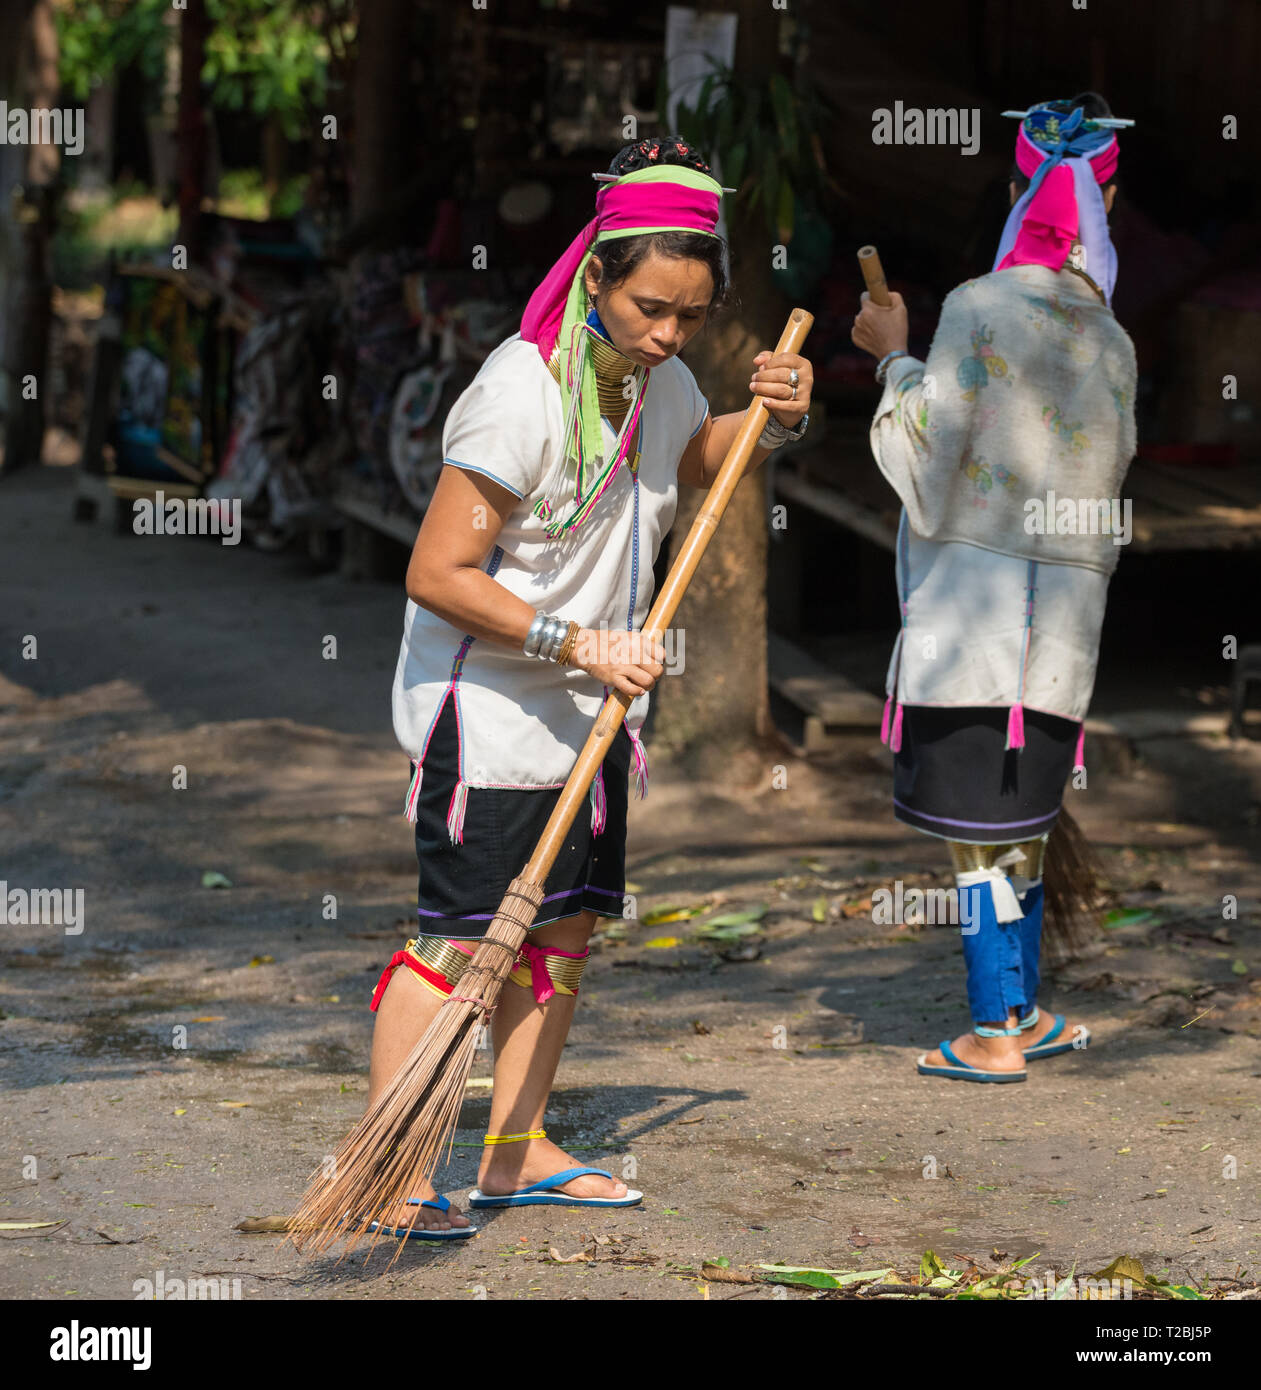 Baan Tong Luang Chiang Mai Thailand April 16 2018 Long Neck Karen Woman Sweeping leaves after rain storm went through their village Stock Photo